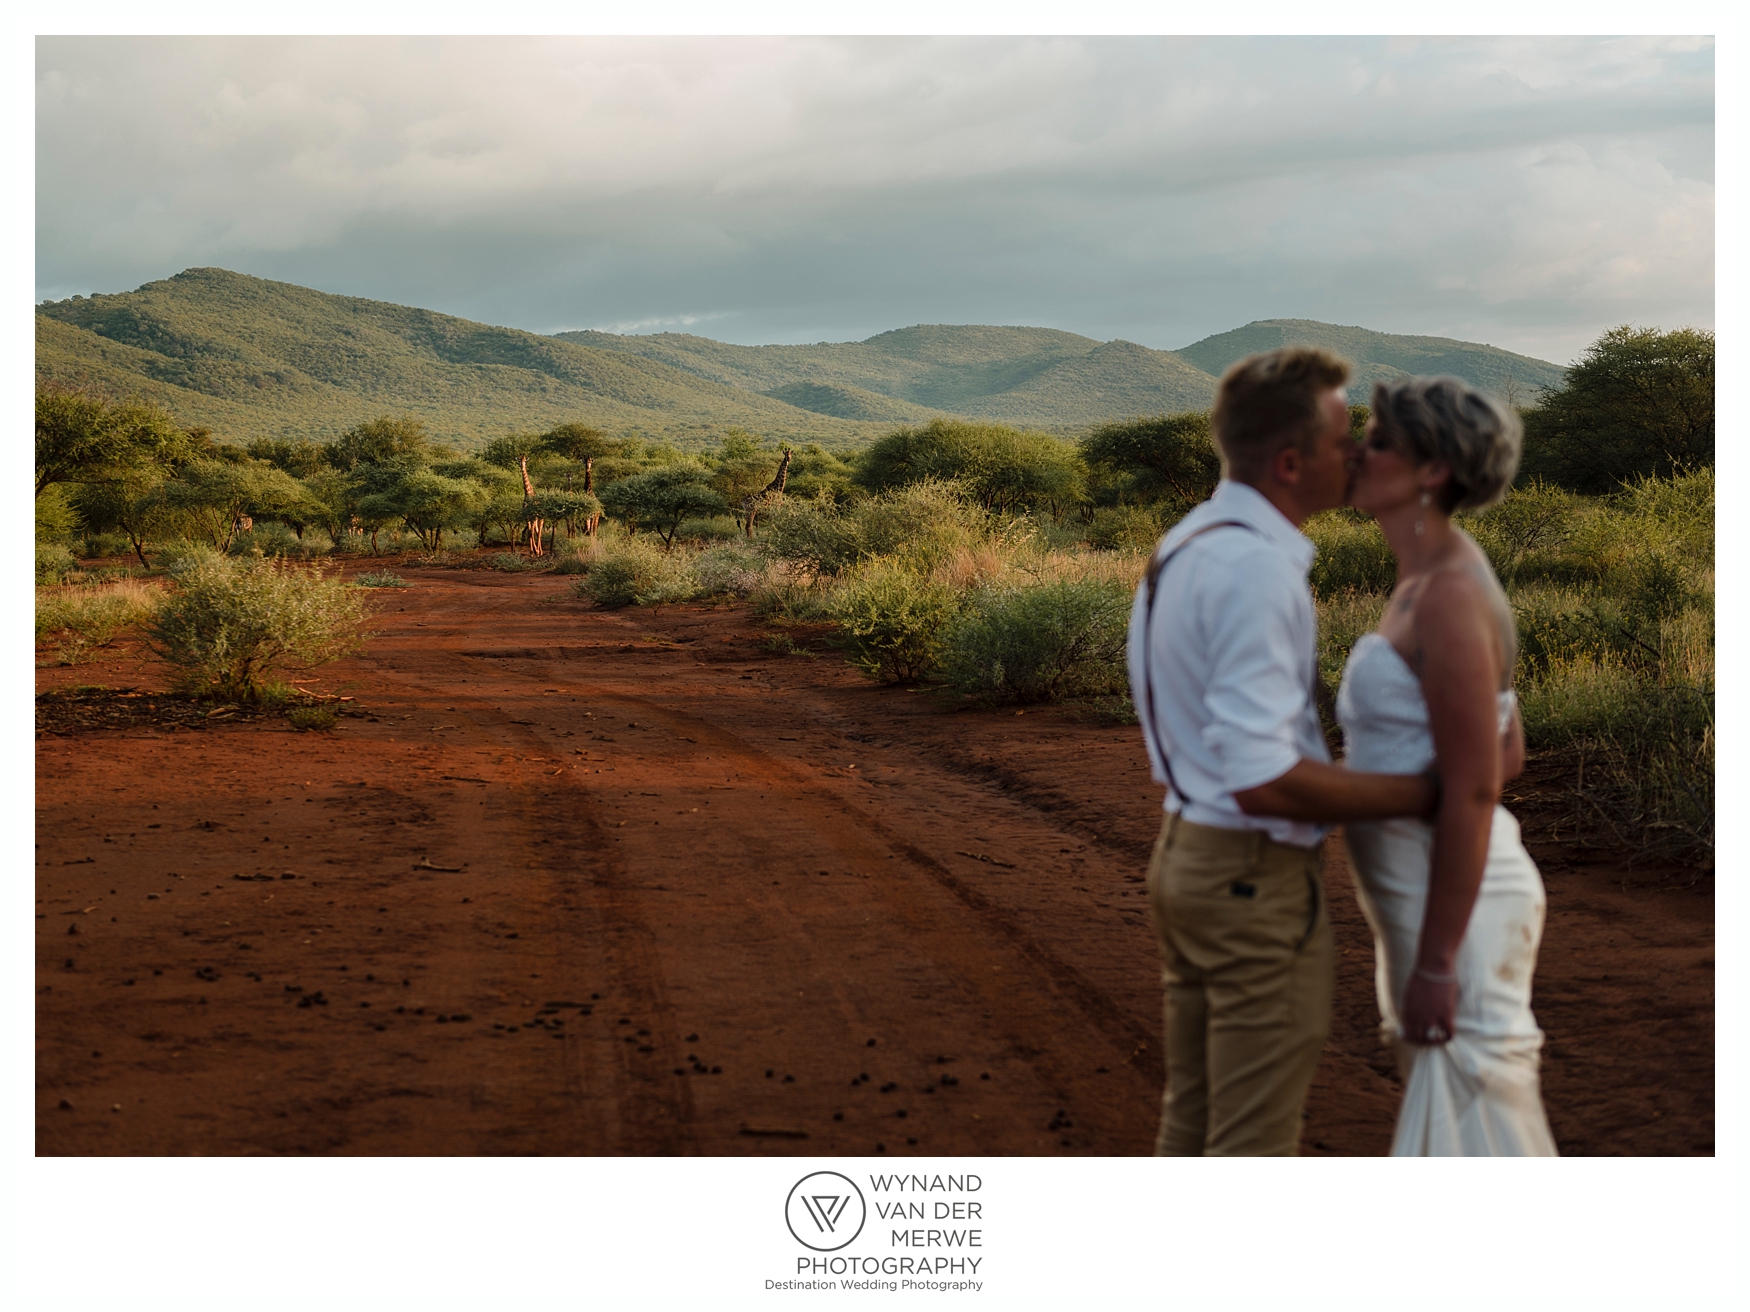 WynandvanderMerwe_weddingphotography_bushveldwedding_northam_bushveld_limpopowedding_limpopo_southafrica-263.jpg